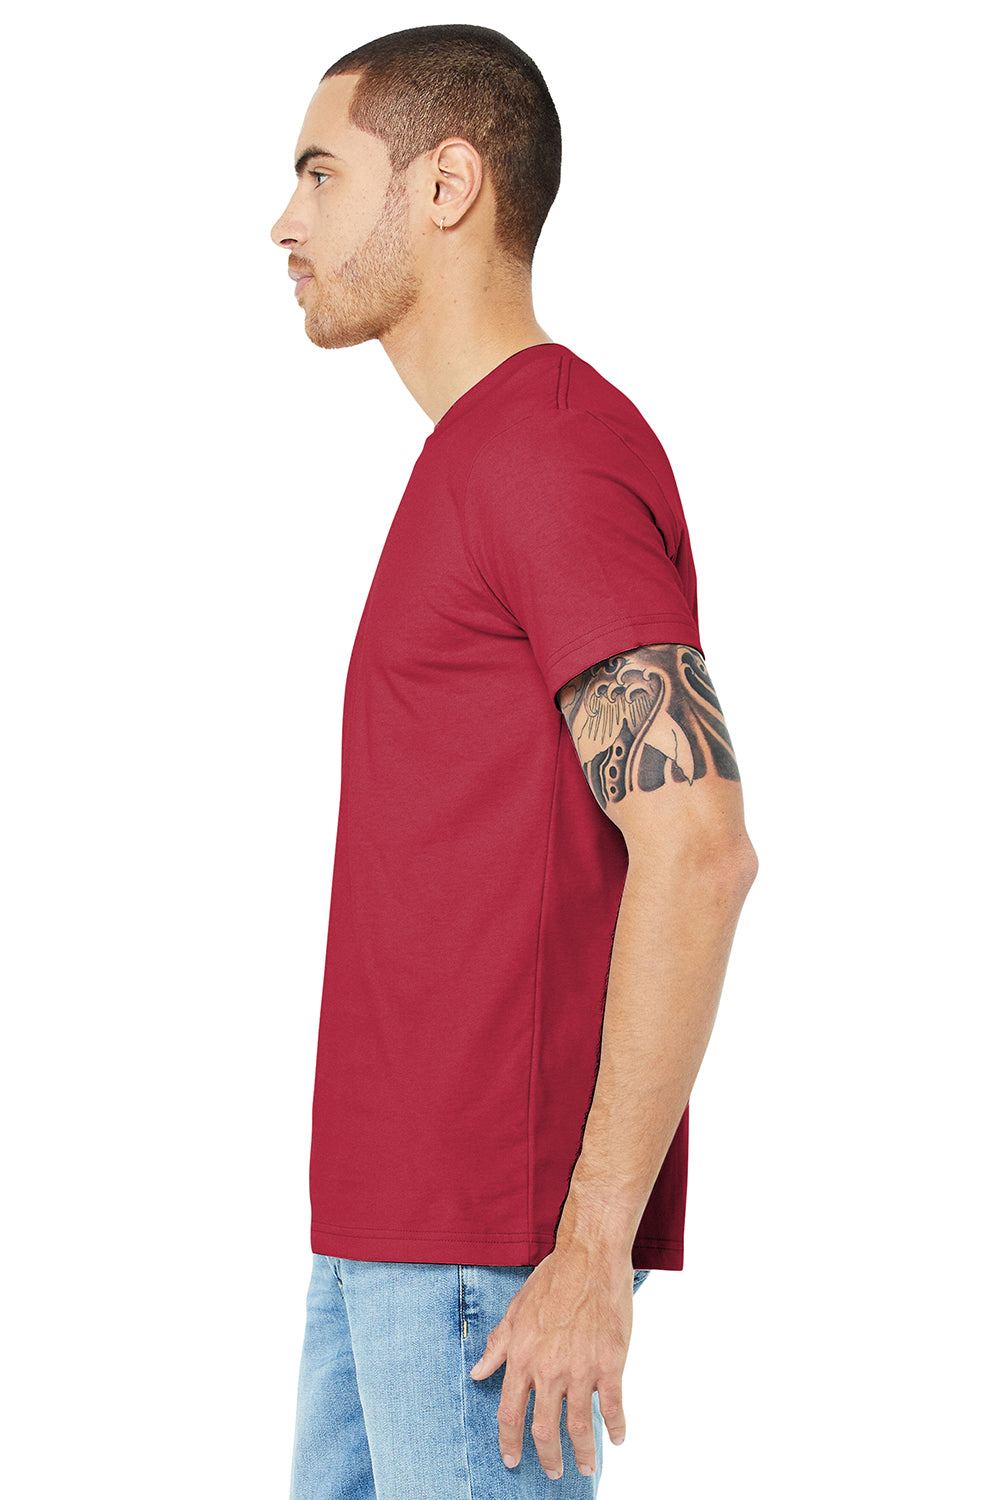 Bella + Canvas BC3001/3001C Mens Jersey Short Sleeve Crewneck T-Shirt Cardinal Red Model Side